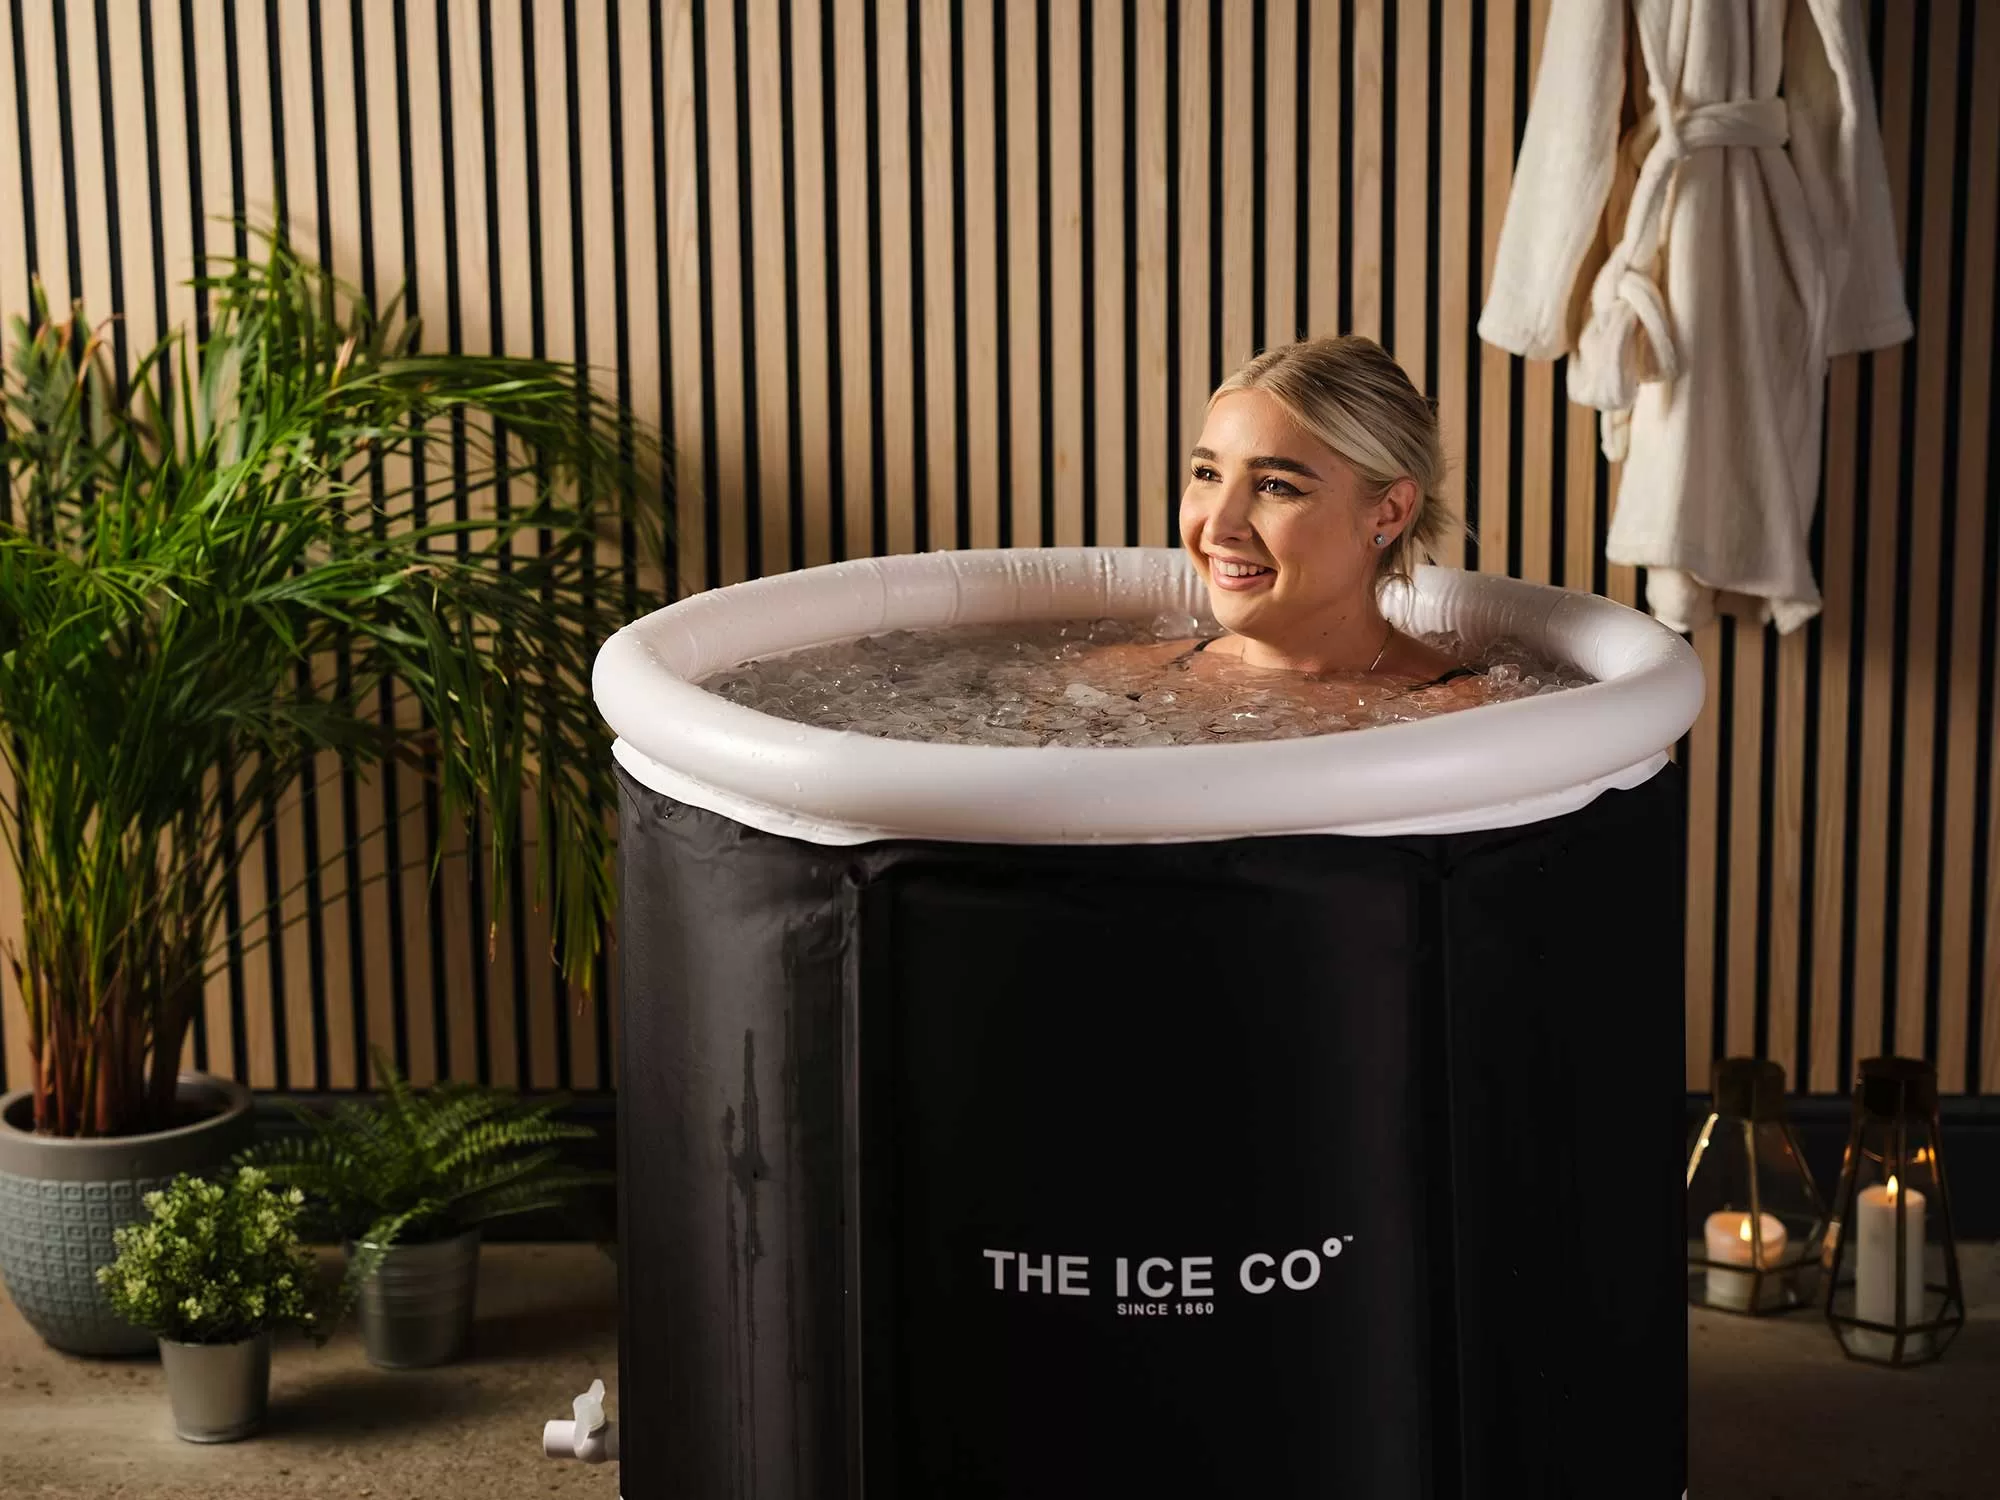 The Ice Co's Ice Bath & Wellness Challenge